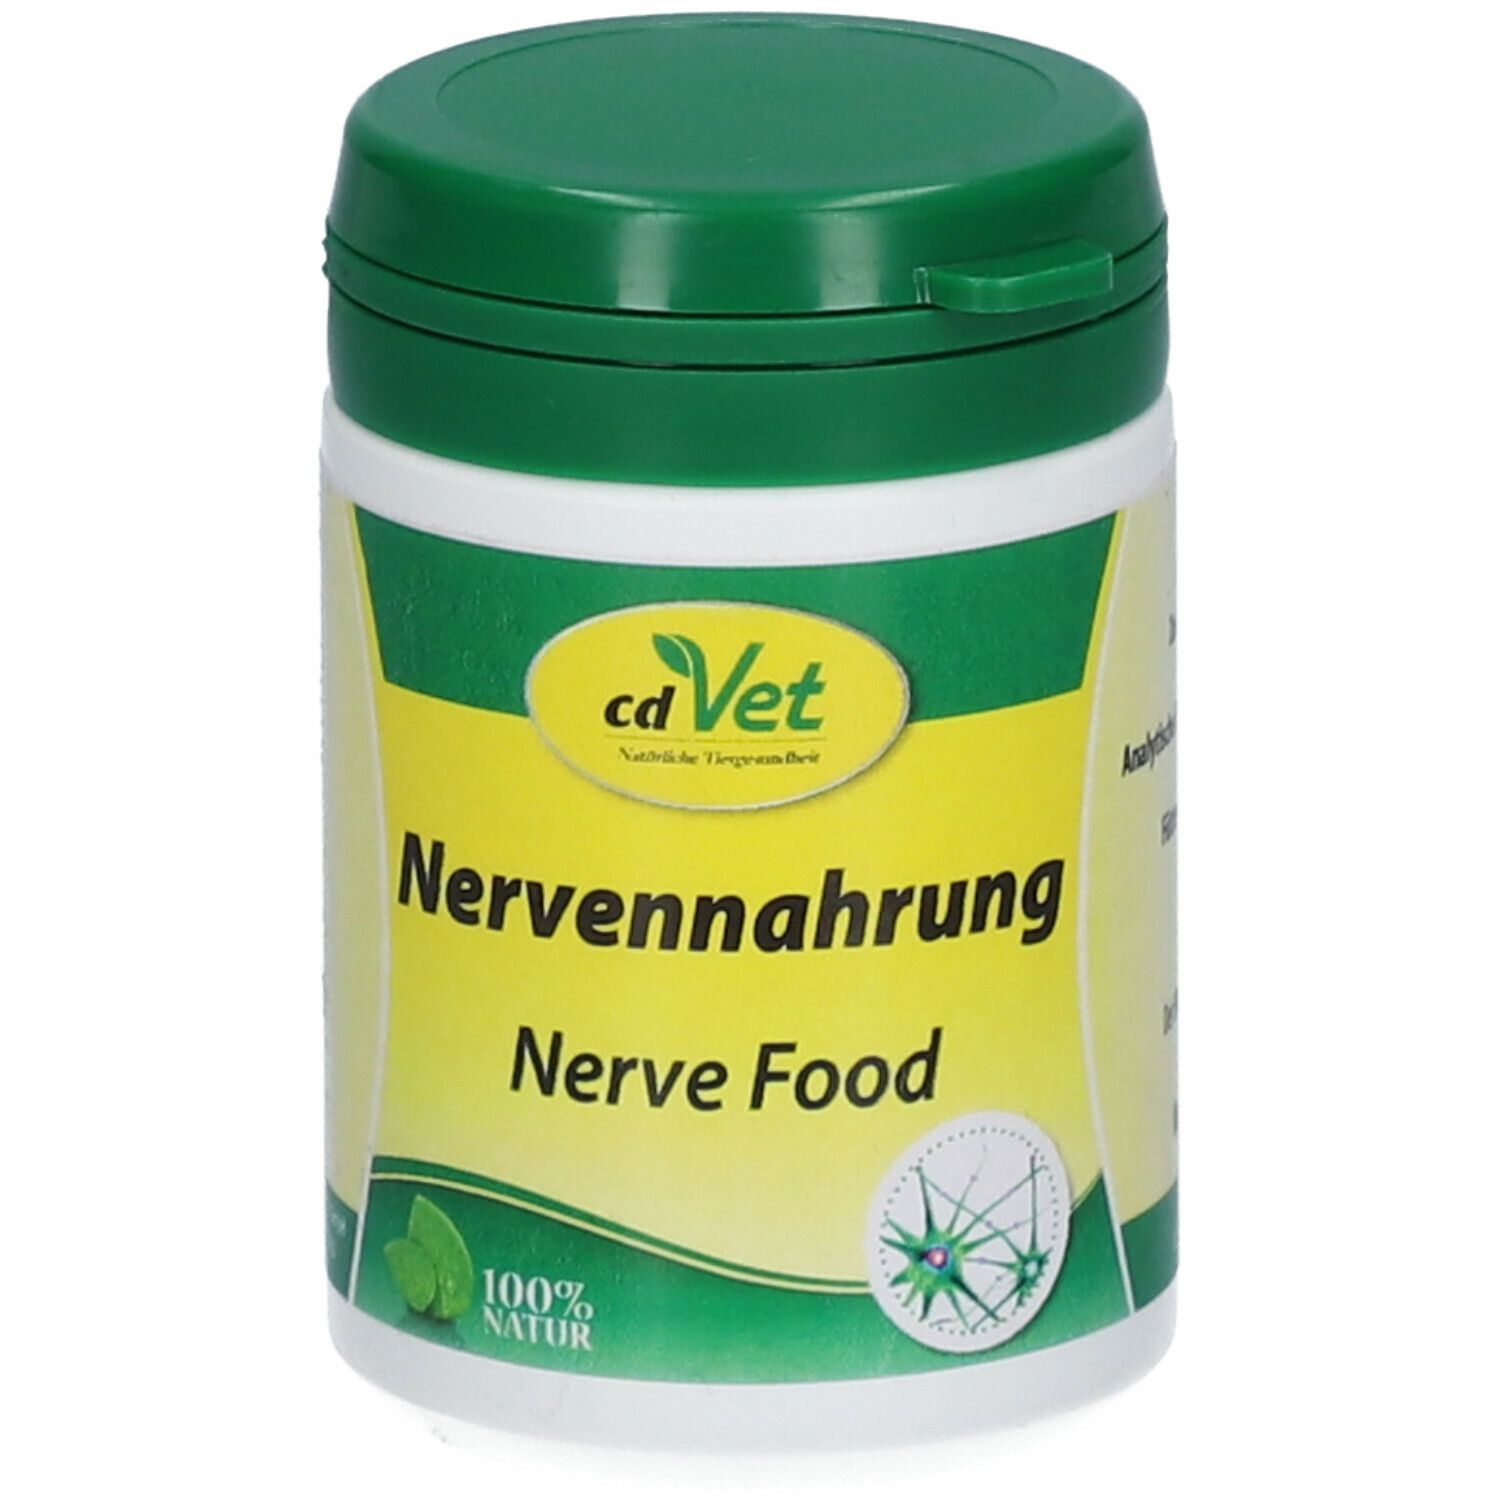 cd Vet Nervennahrung - Nerve Food